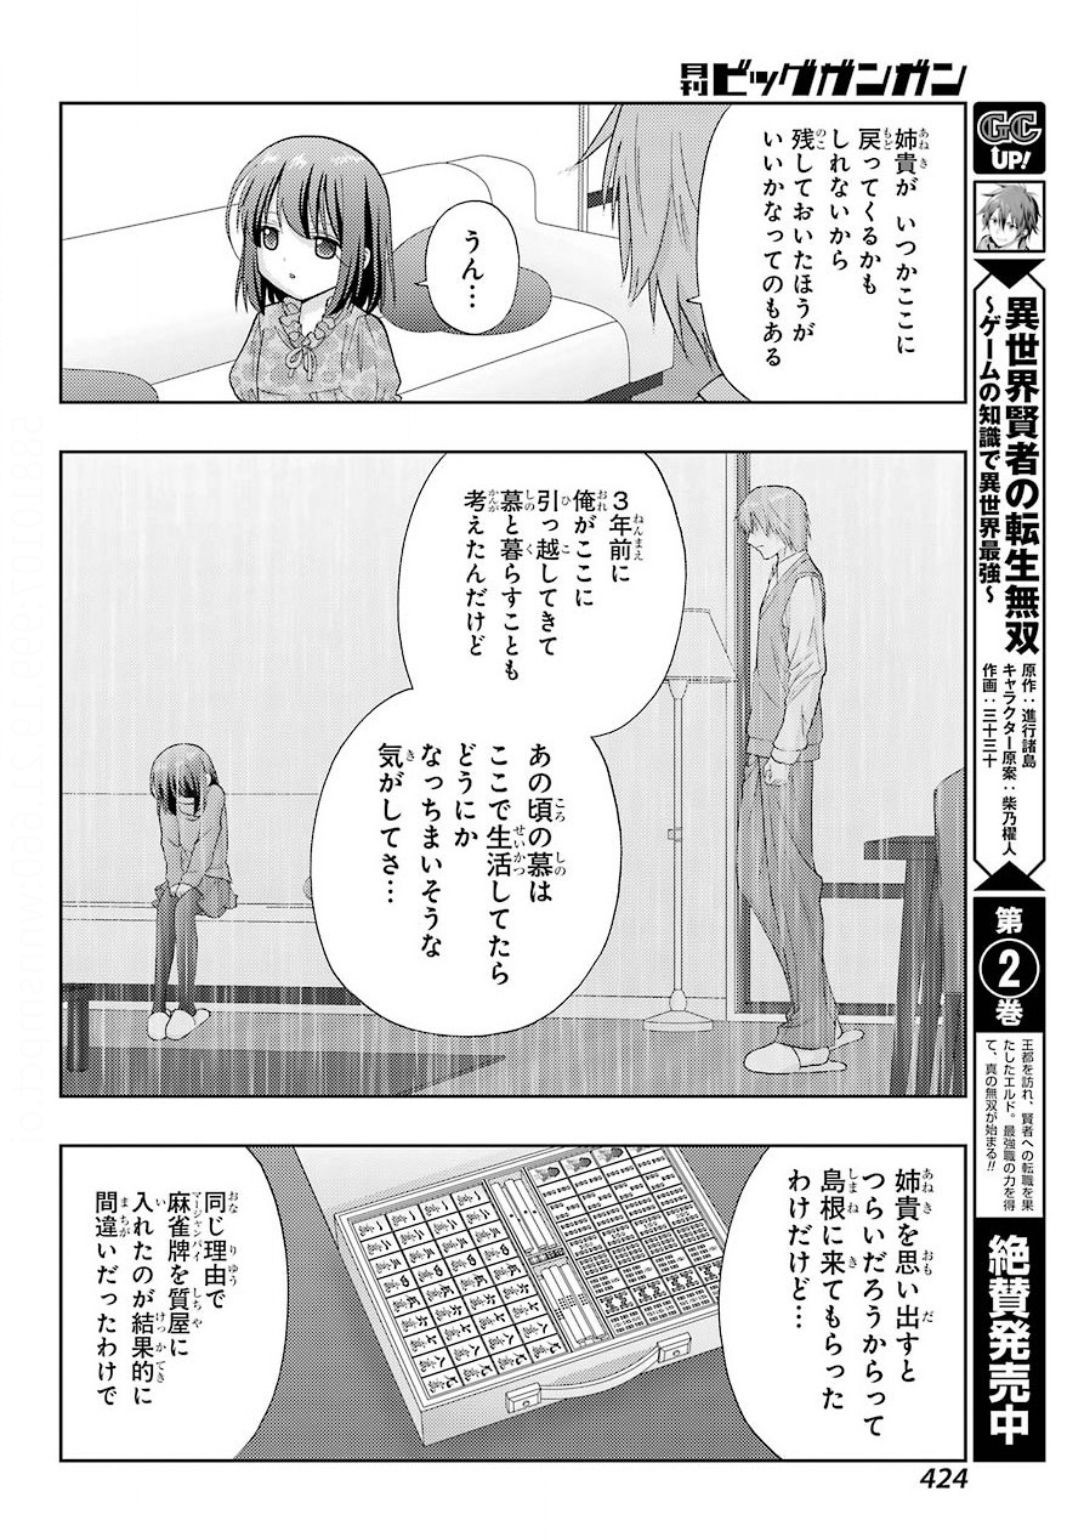 Shinohayu - The Dawn of Age Manga - Chapter 082 - Page 22